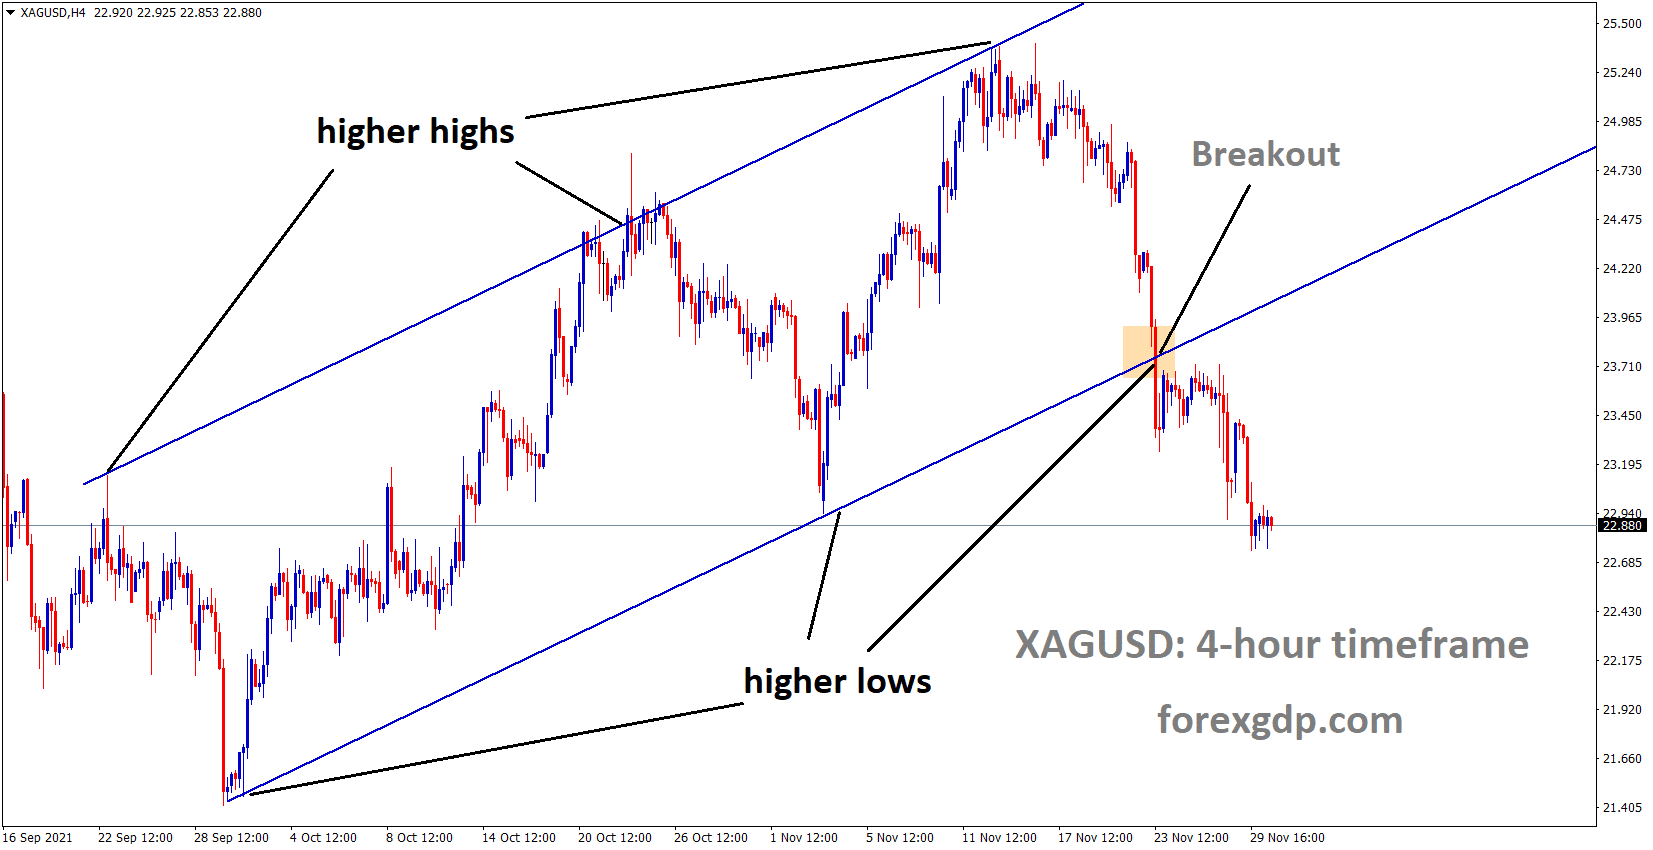 XAGUSD Silver price has broken the Ascending channel